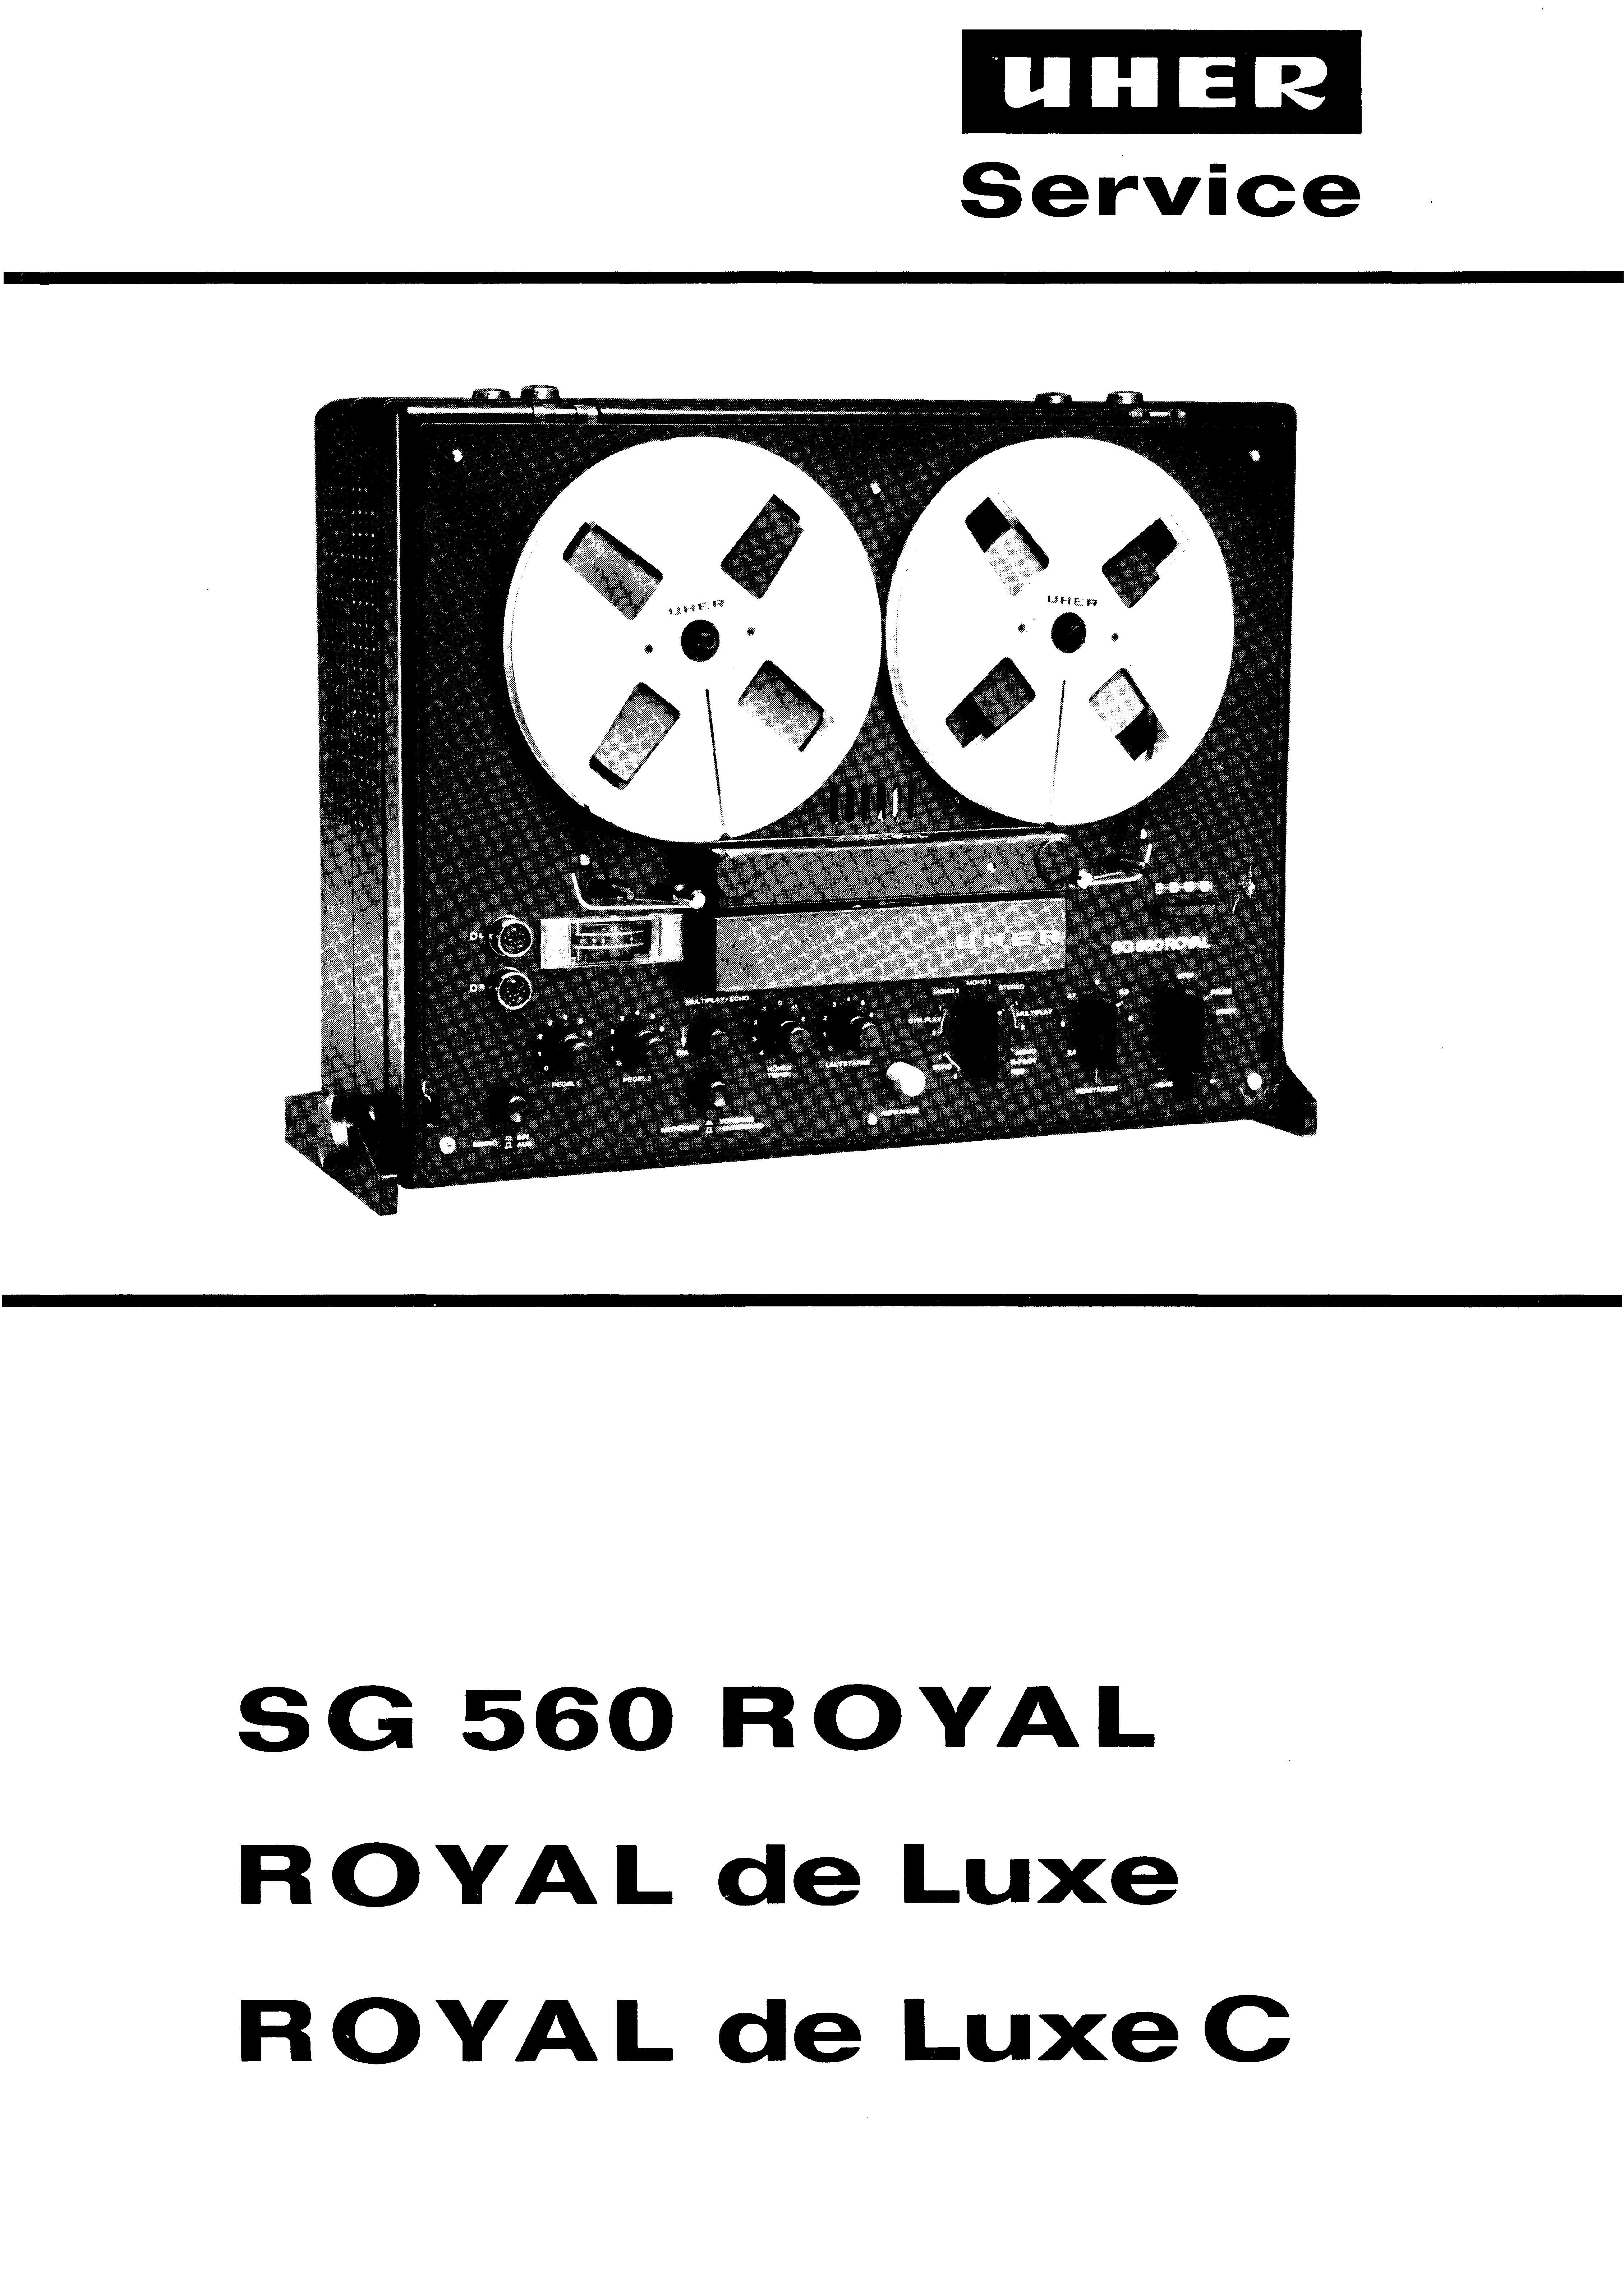 UHER SG 560 ROYAL ROYAL DE LUXE SM service manual (1st page)